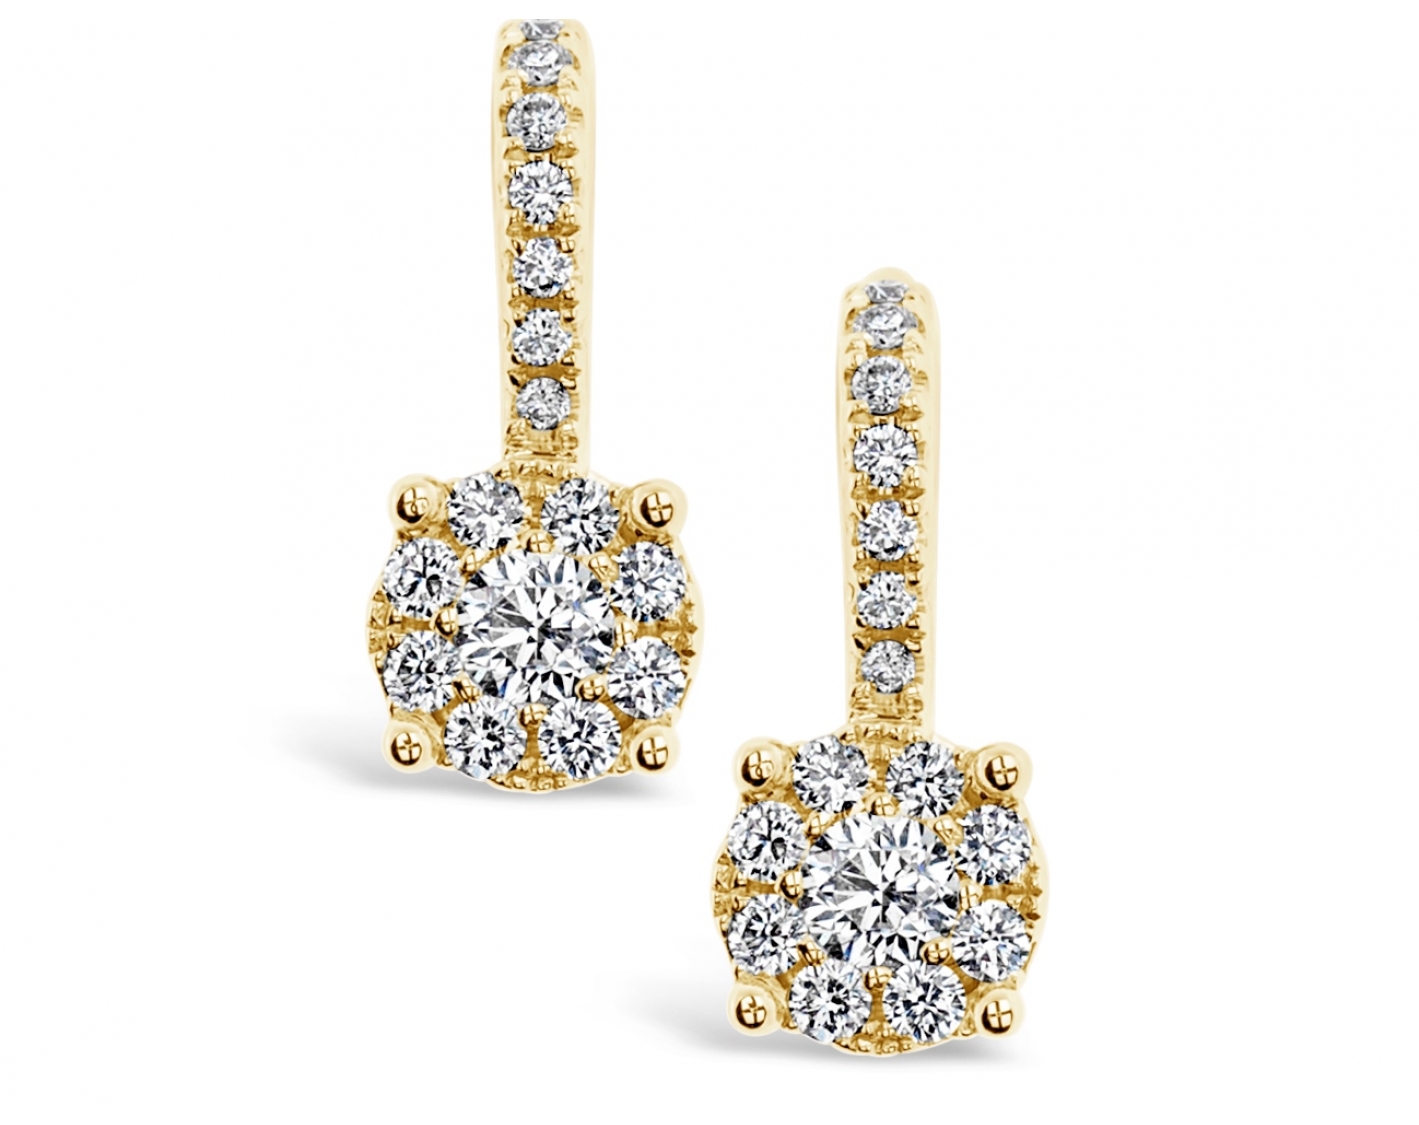 18k rose gold halo illusion set diamond earrings with upstones Photos & images